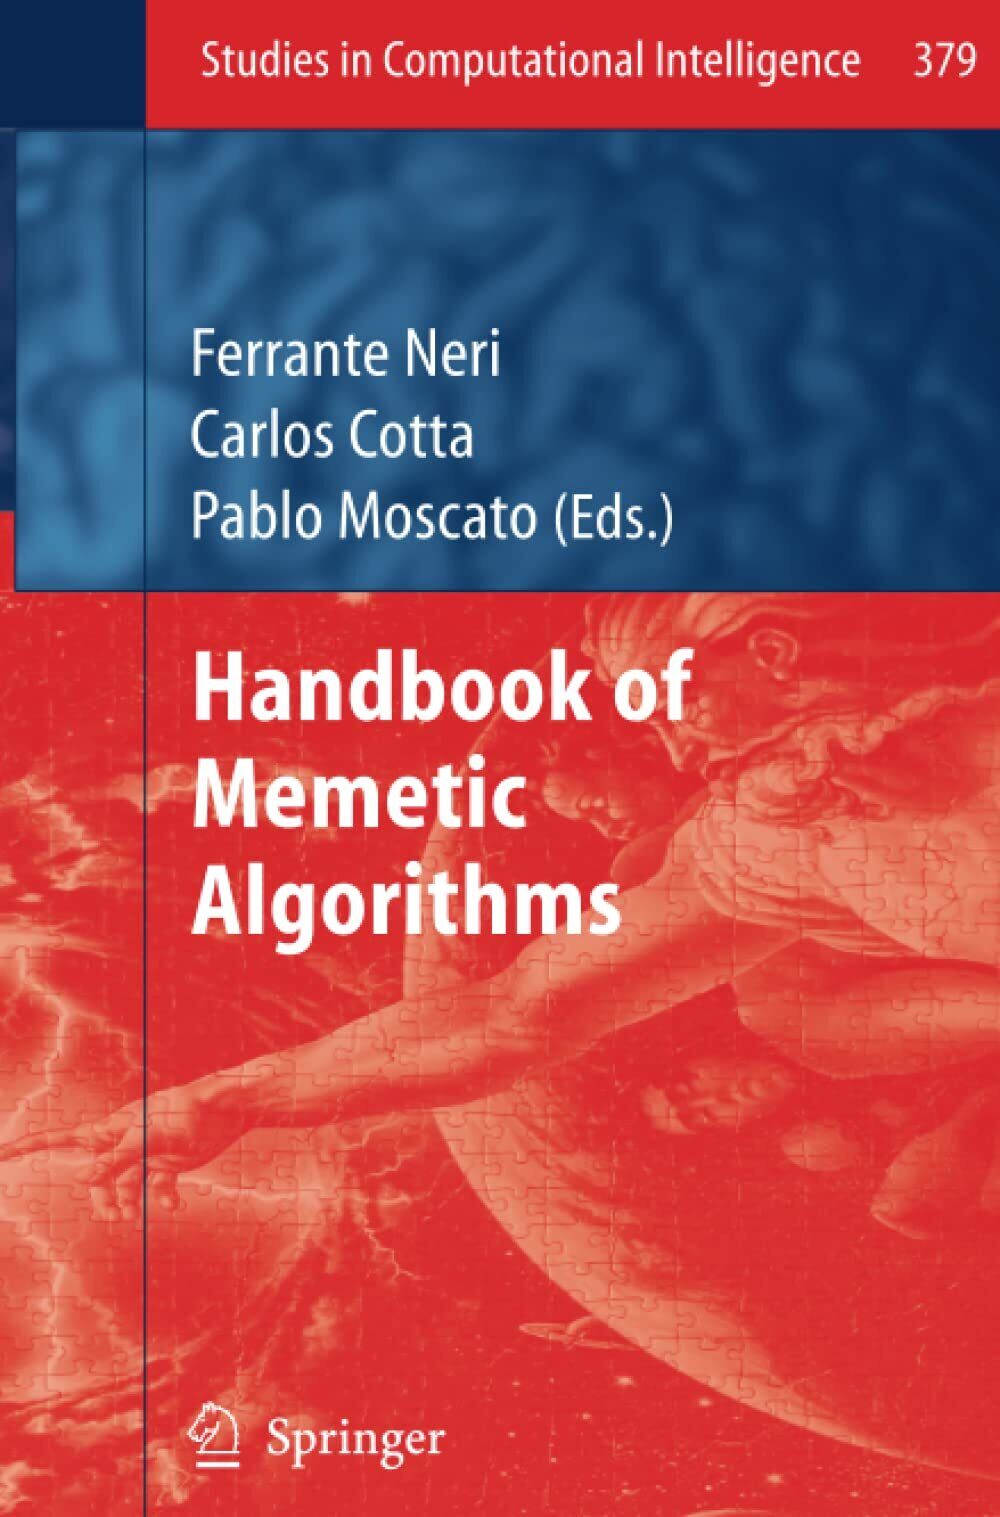 Handbook of Memetic Algorithms - Ferrante Neri - Springer, 2013 libro usato